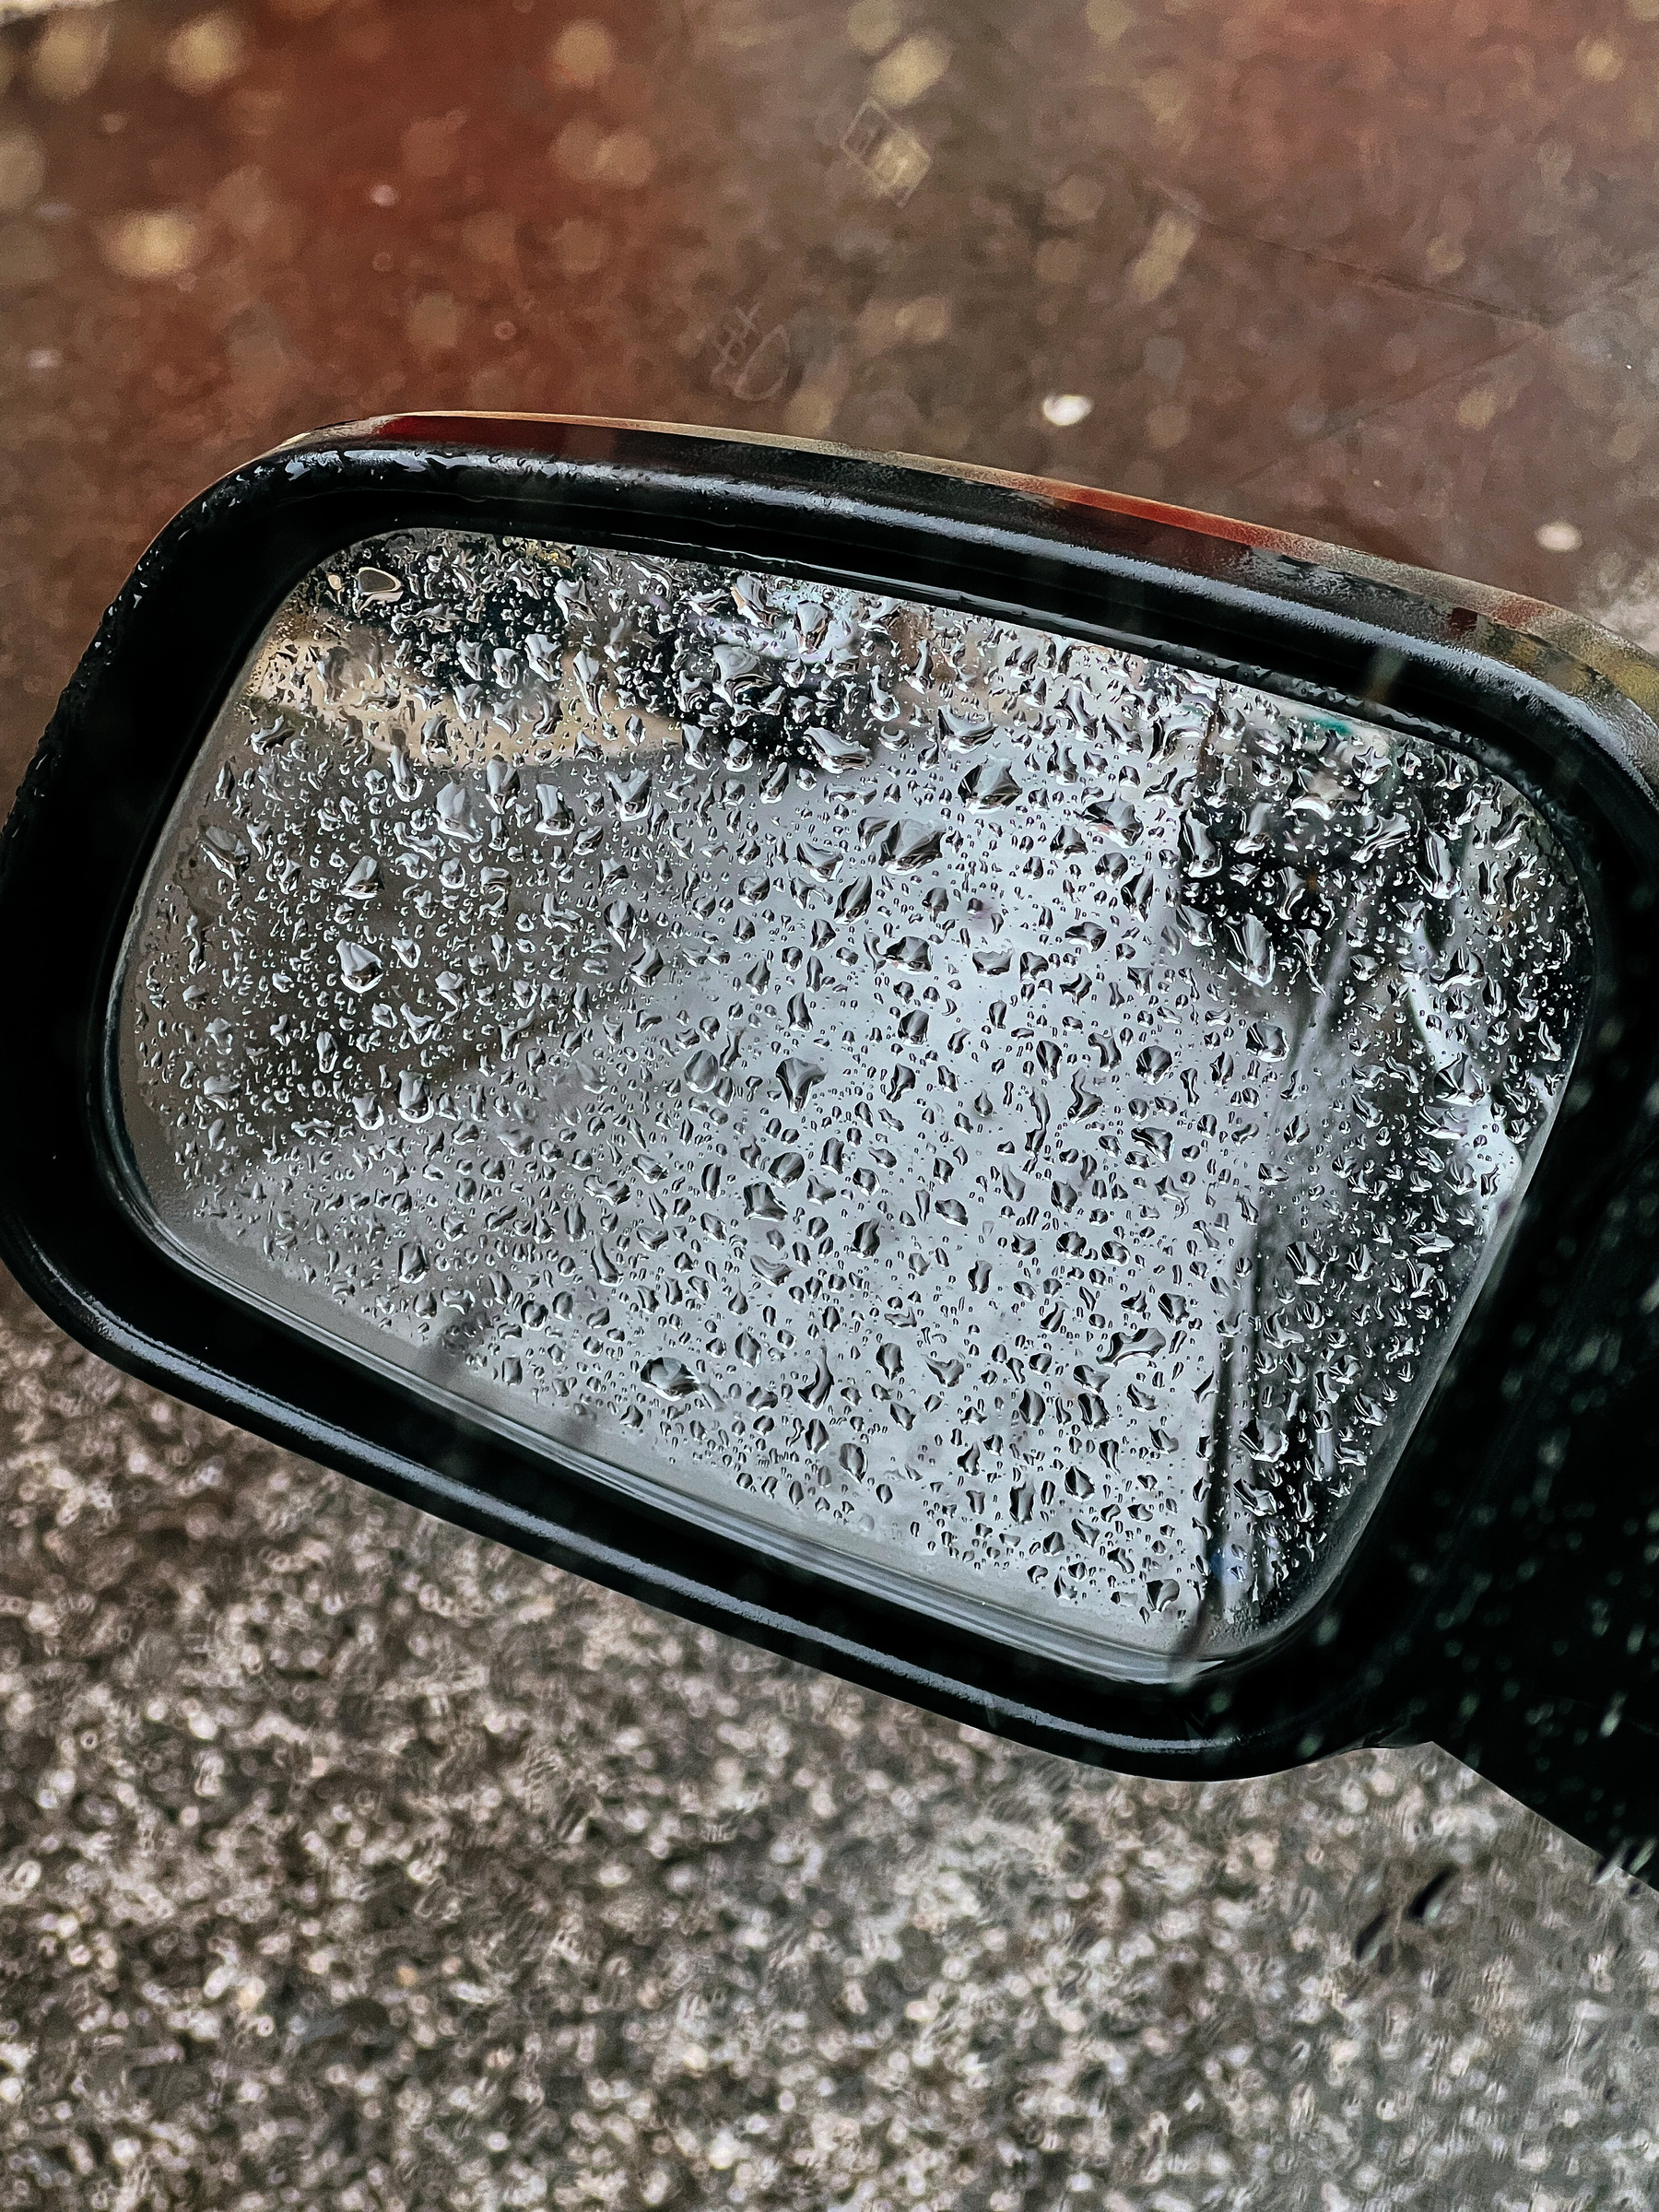 Raindrops on a car side mirror. 